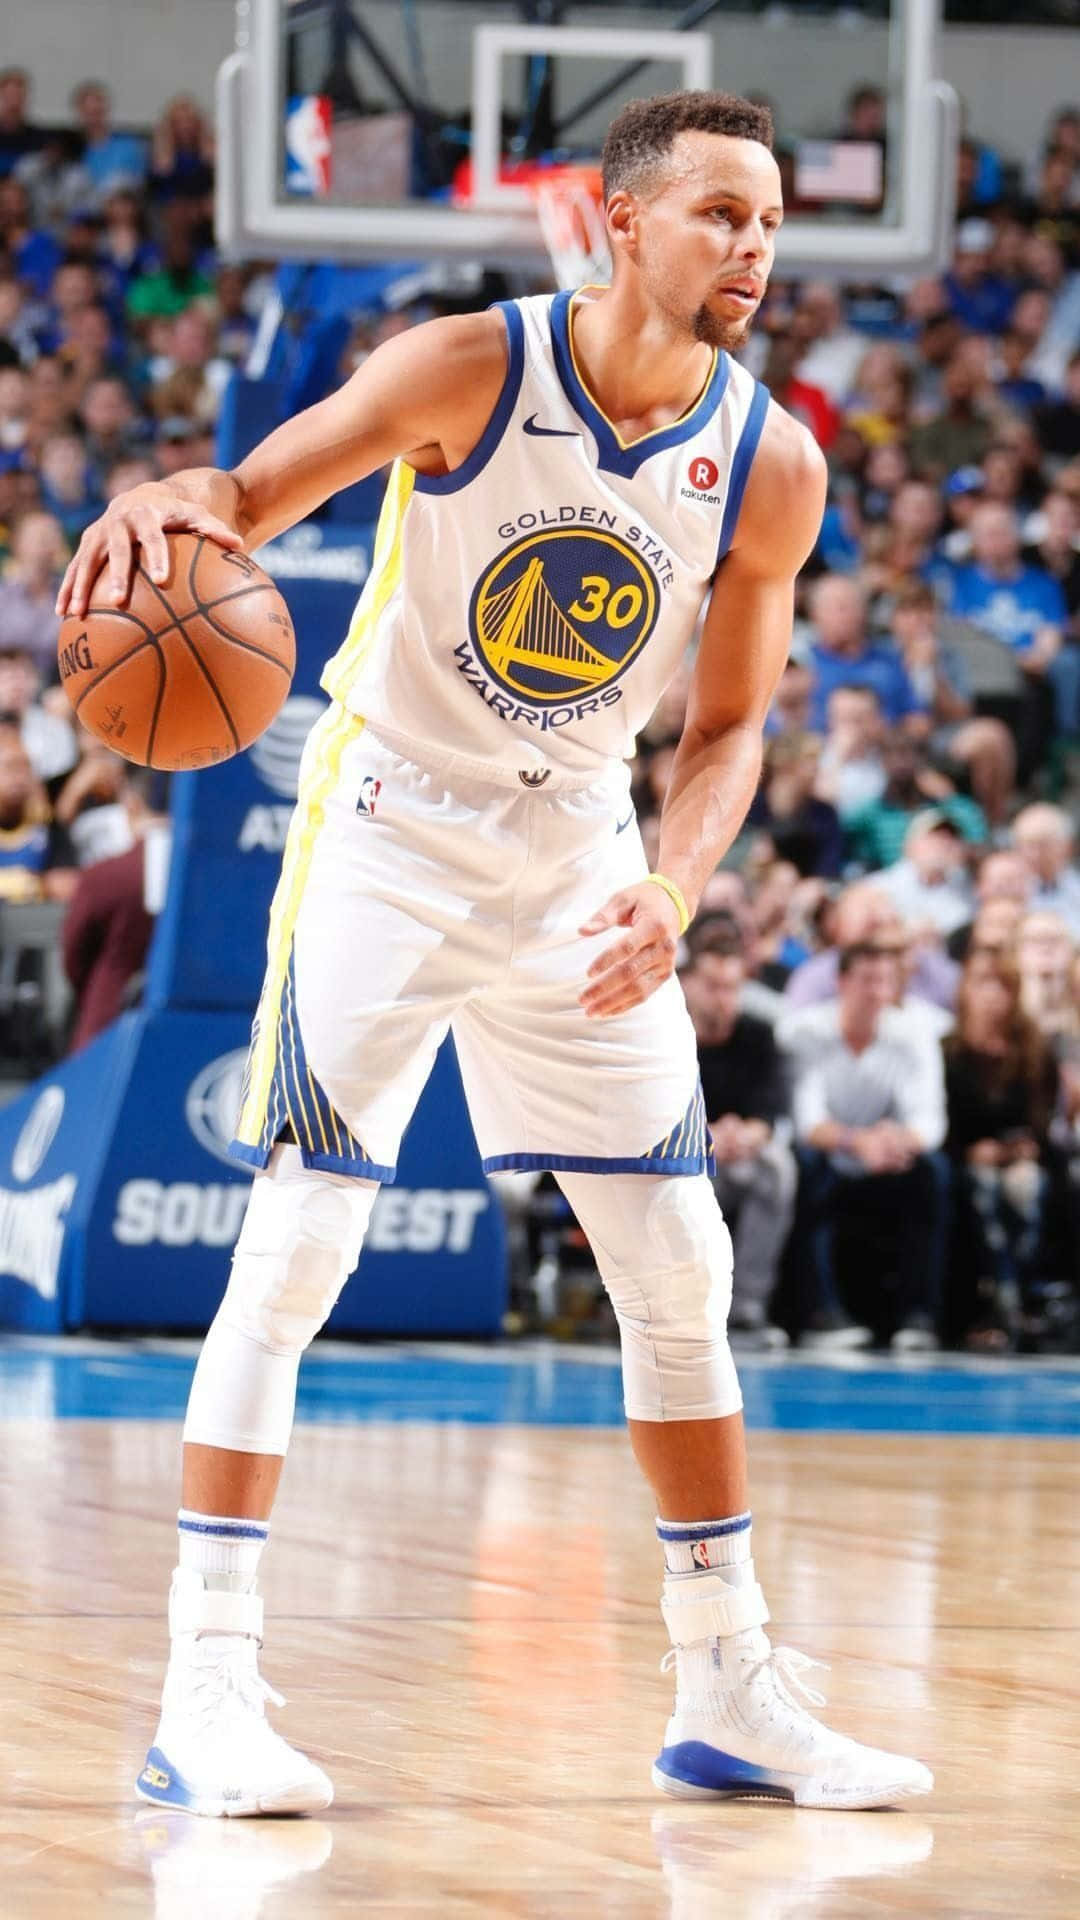 Denlegendariska Basketspelaren Stephen Curry Lever Upp Till Sin Mvp-titel.